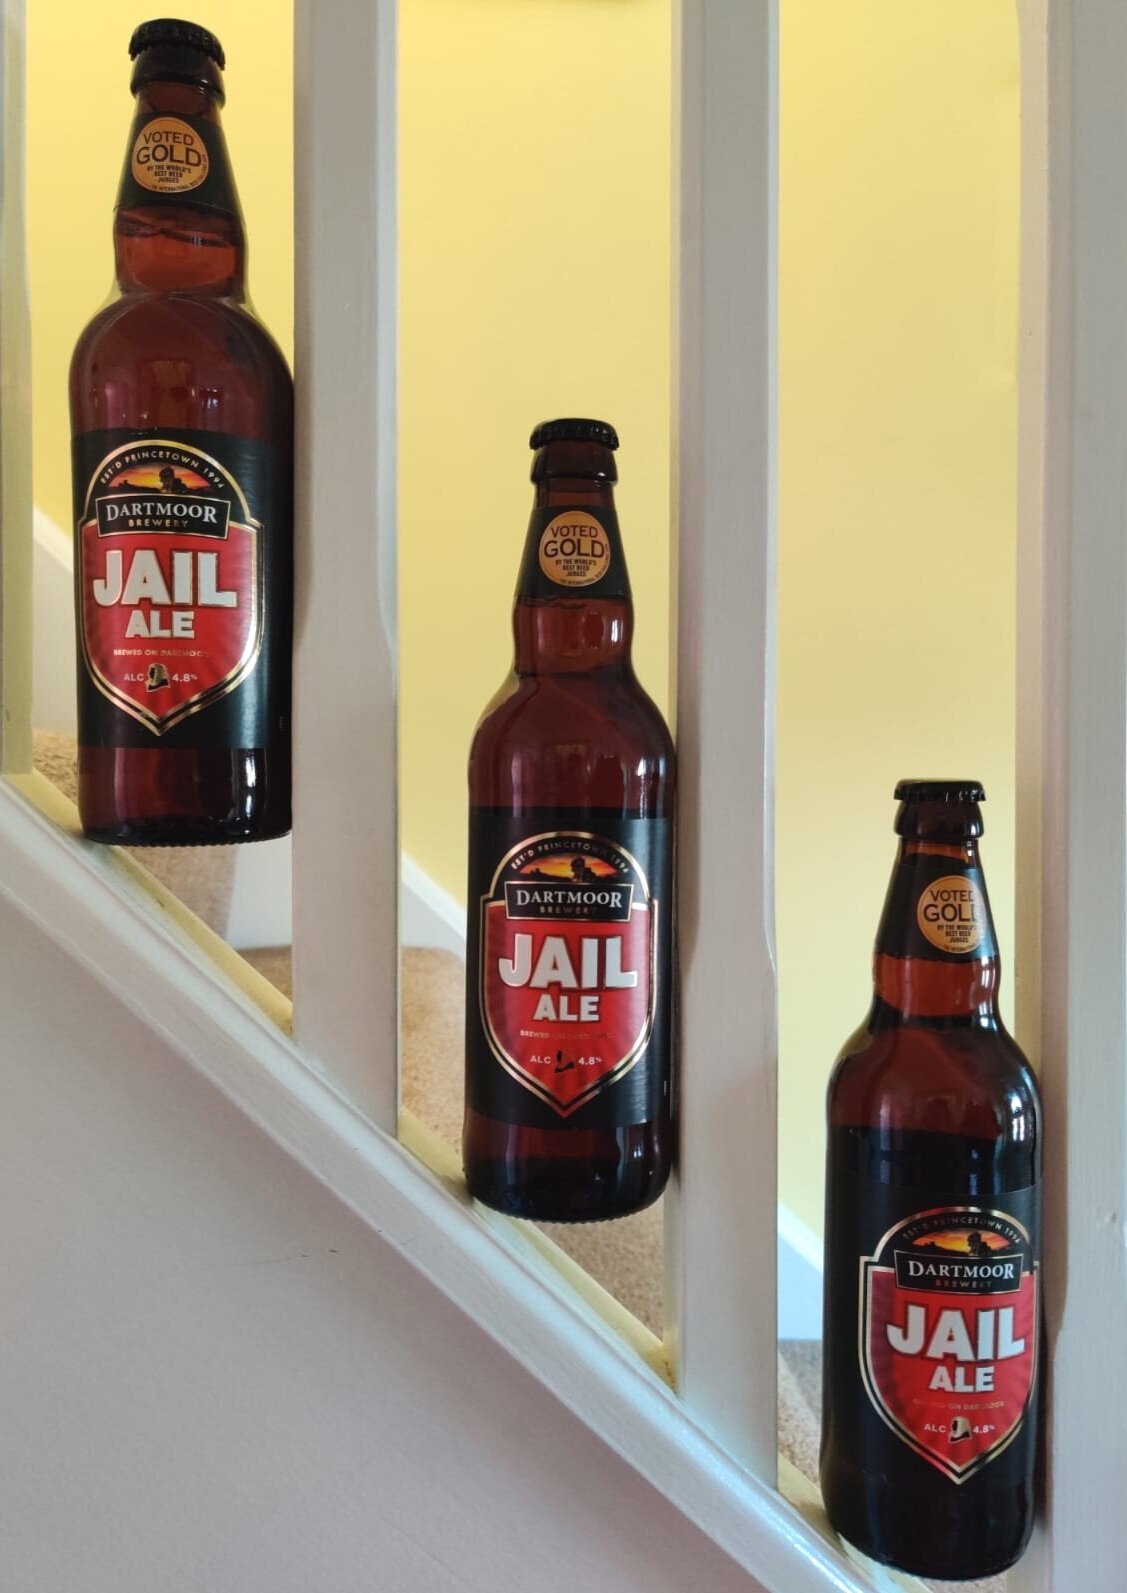 Jail Ale review